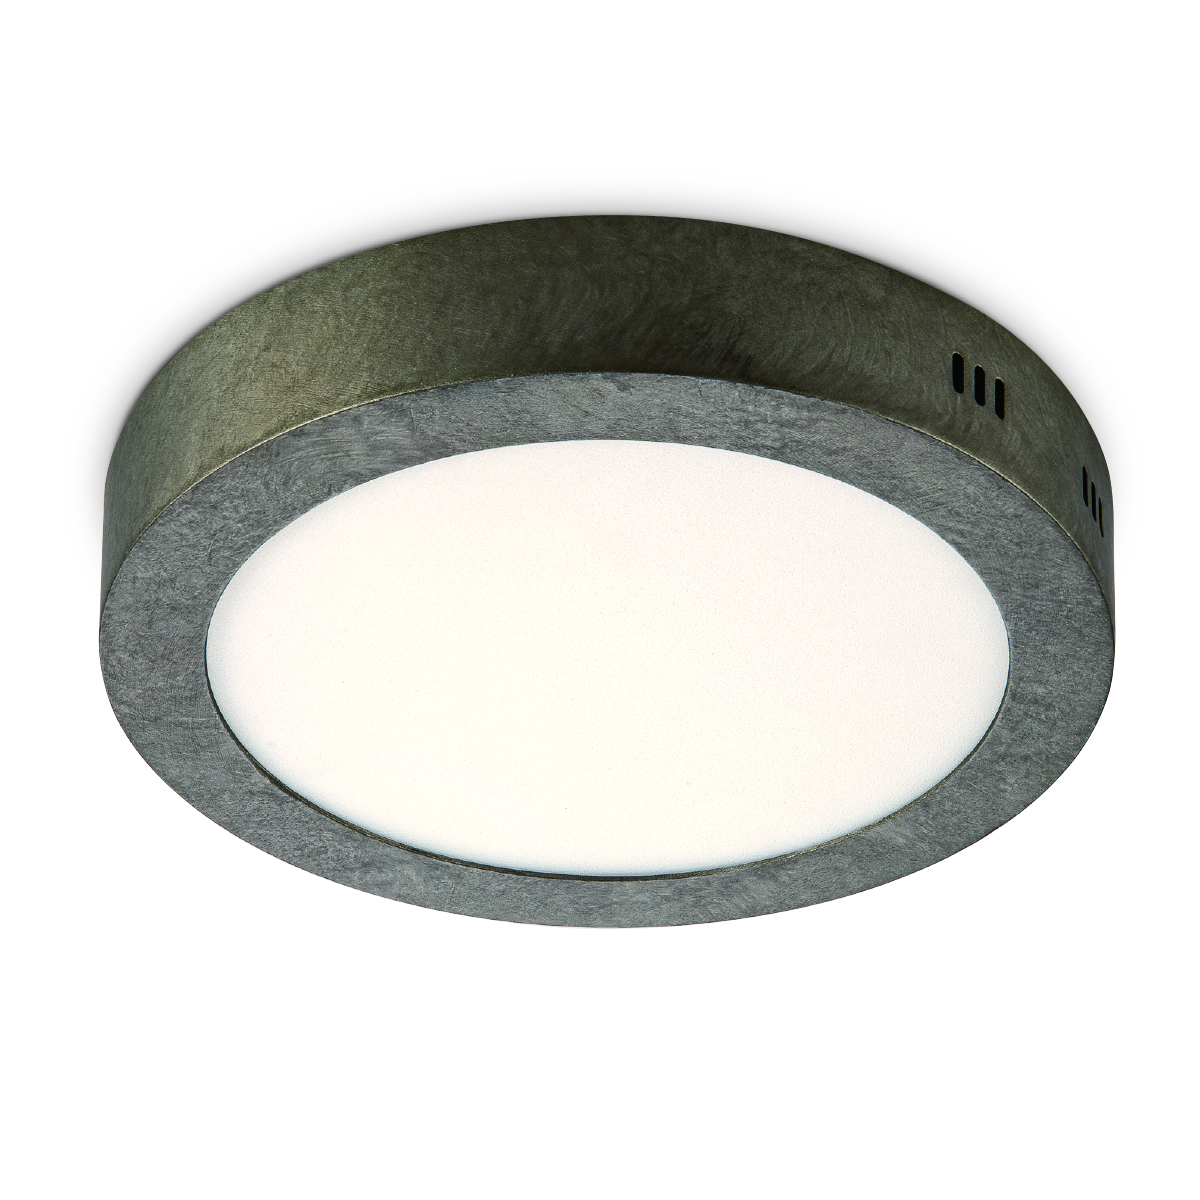 Tangla lighting - TLC5014-15GM - LED Ceiling lamp - metal - burned metal - large - round - pie